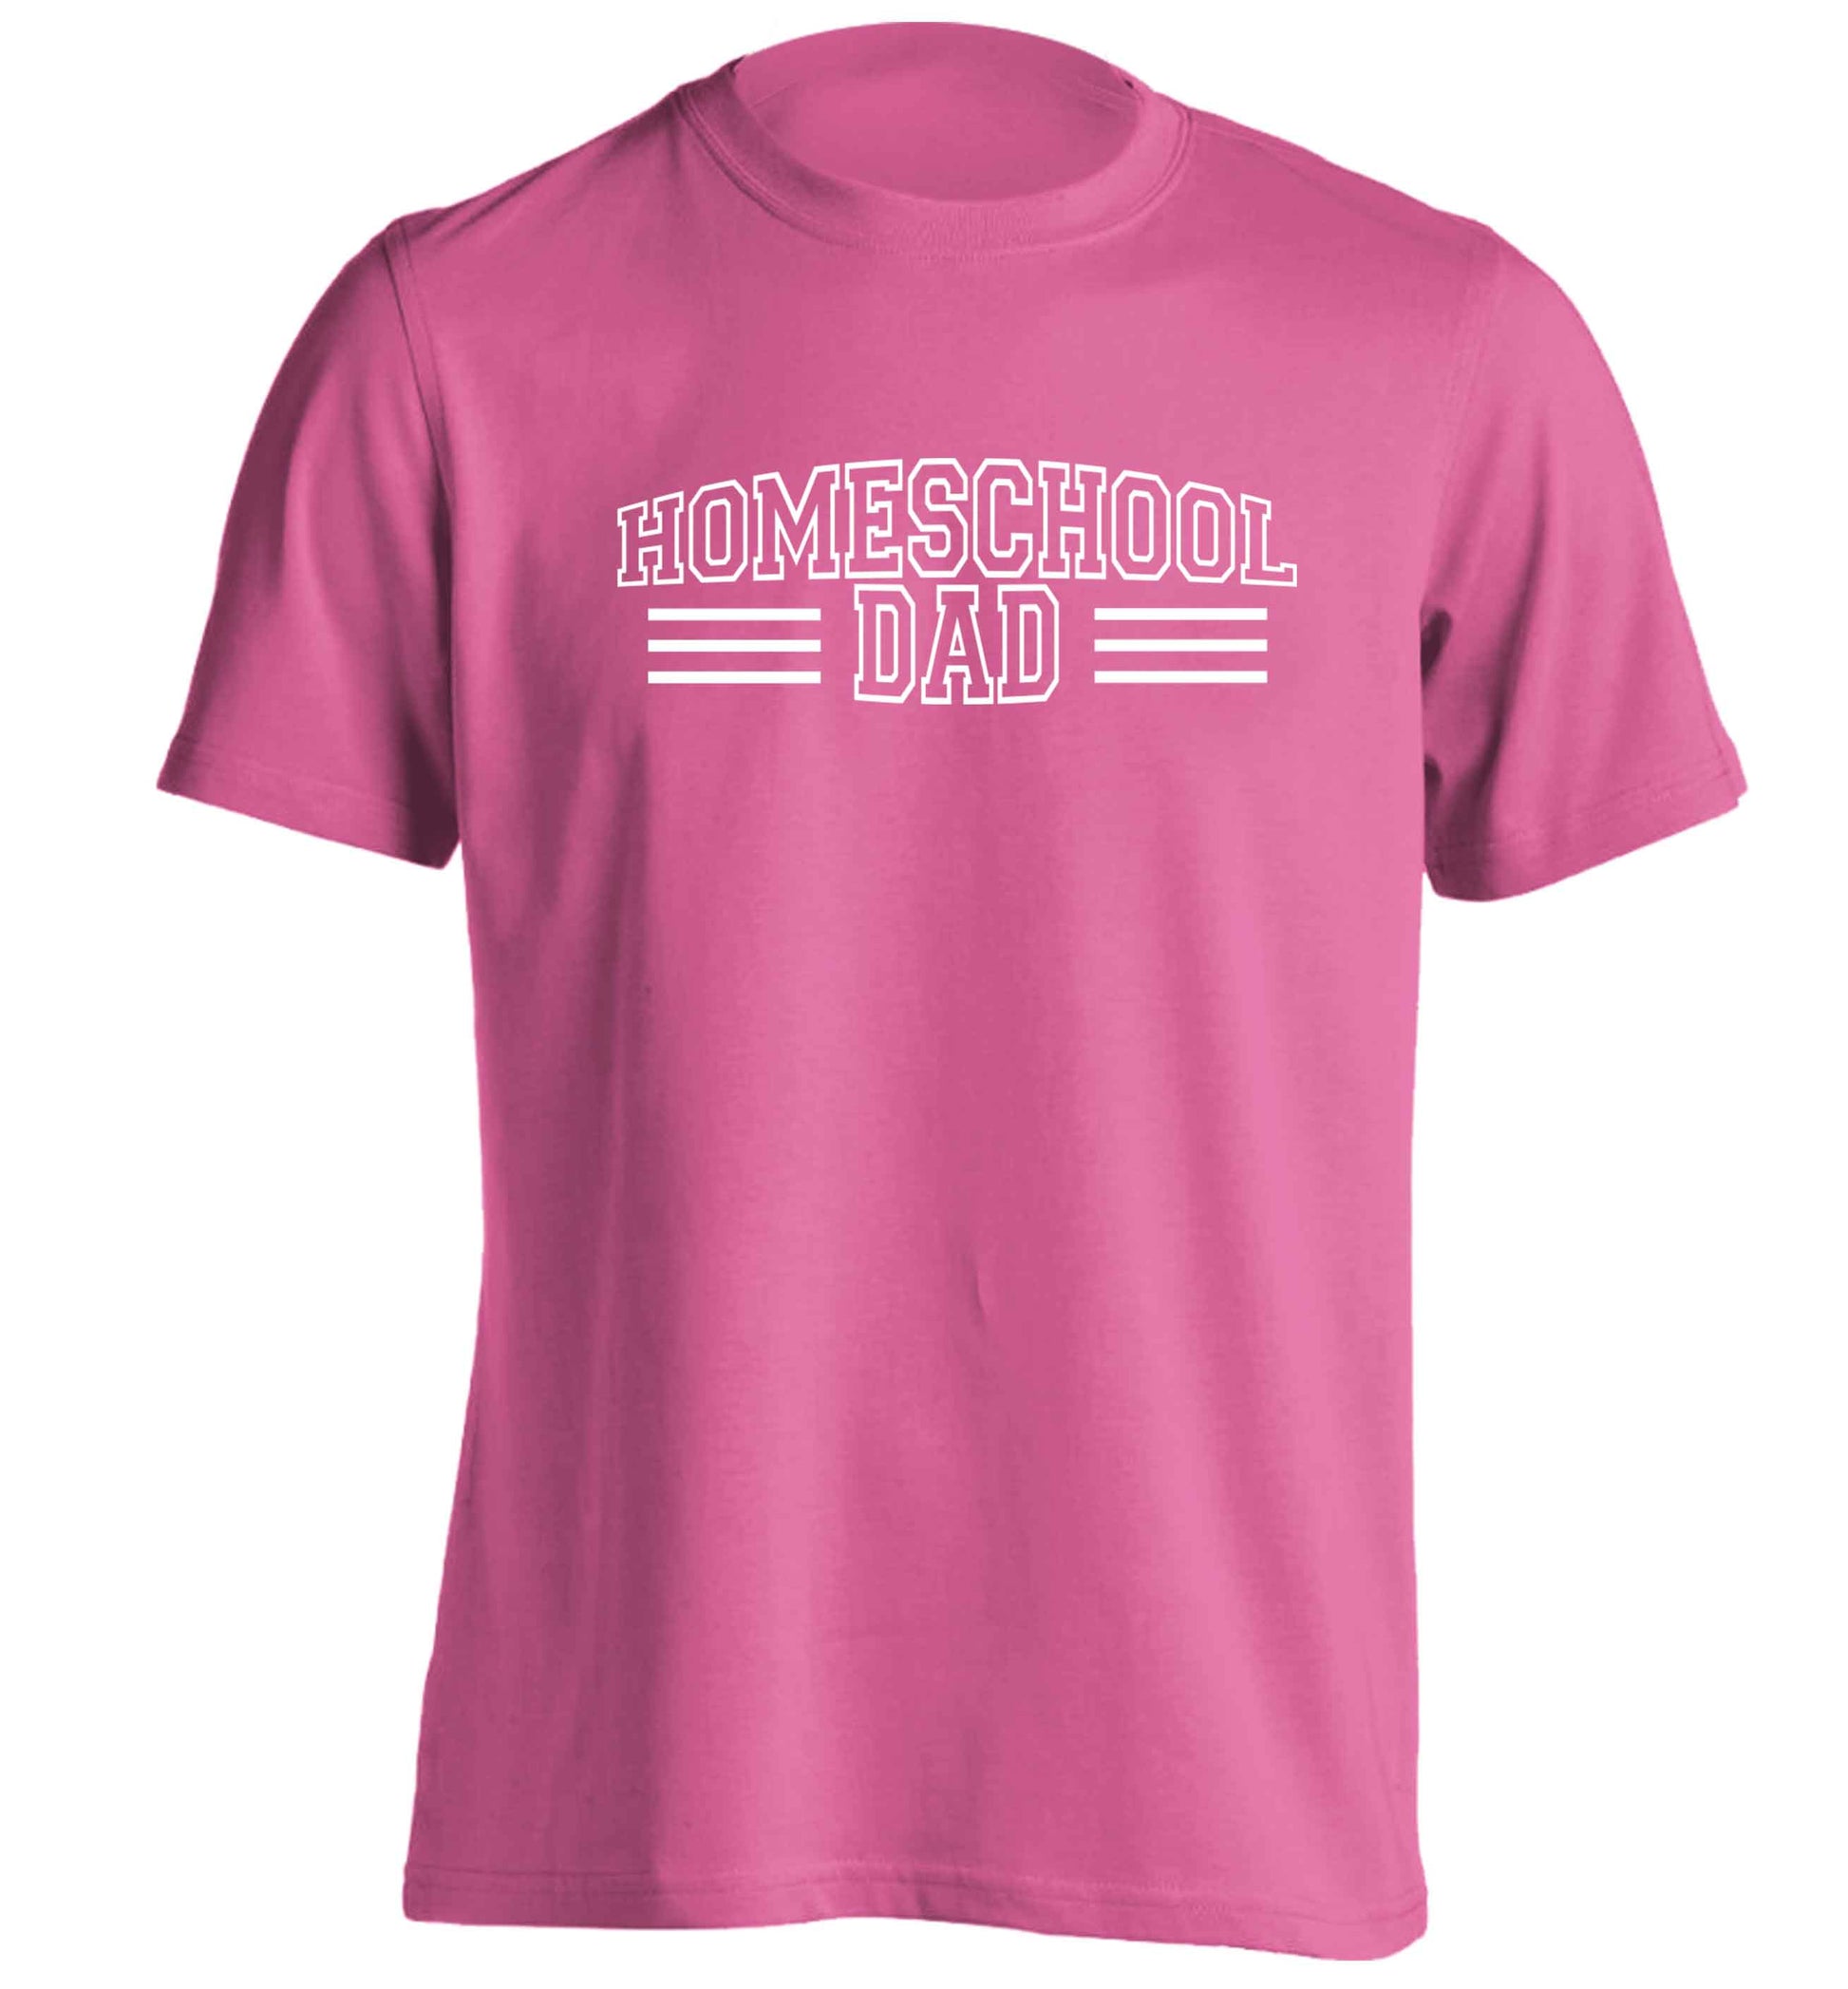 Homeschool dad adults unisex pink Tshirt 2XL